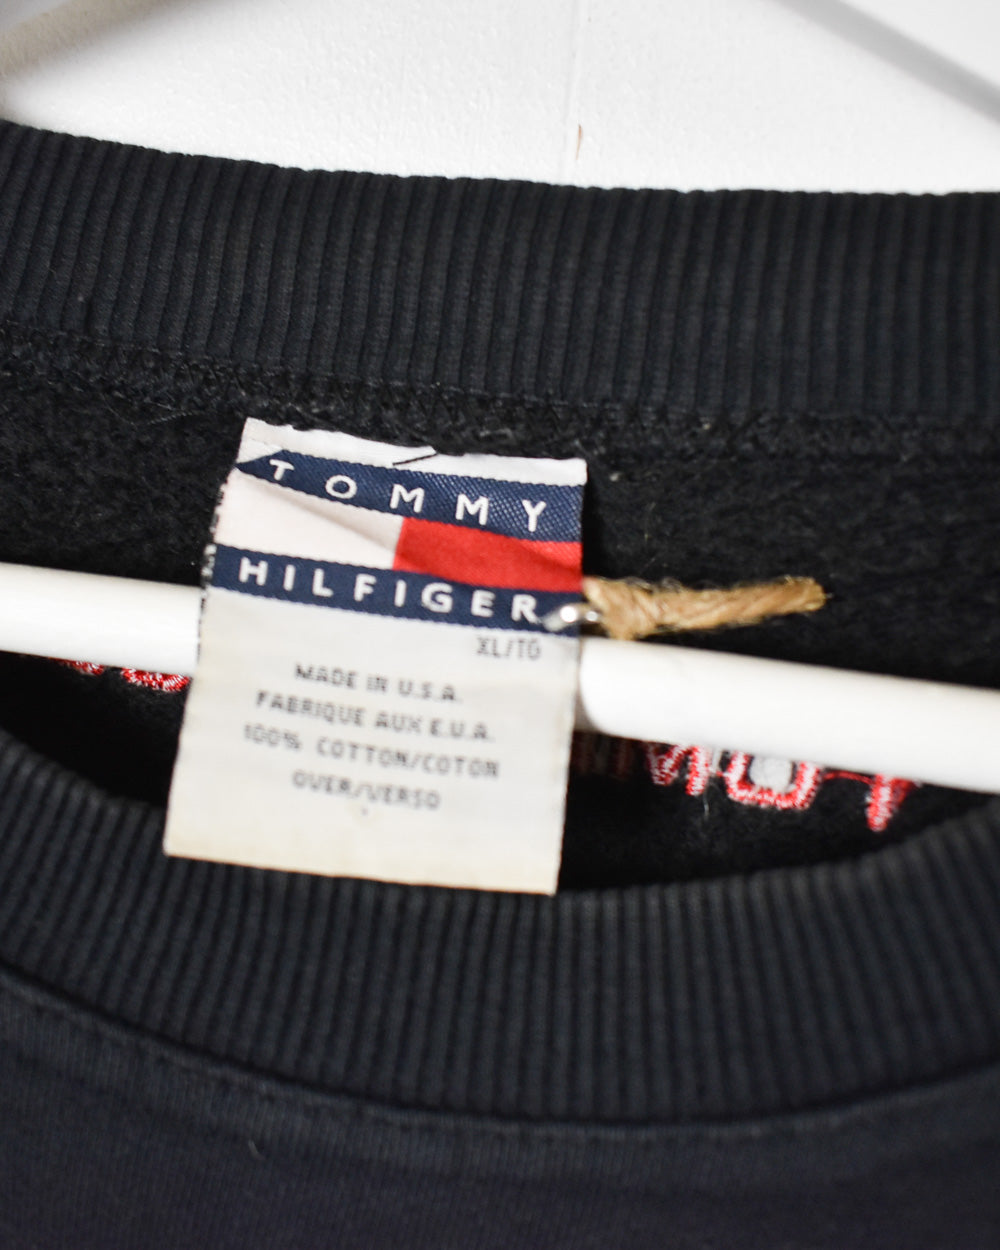 Black Tommy Hilfiger Sweatshirt - Large